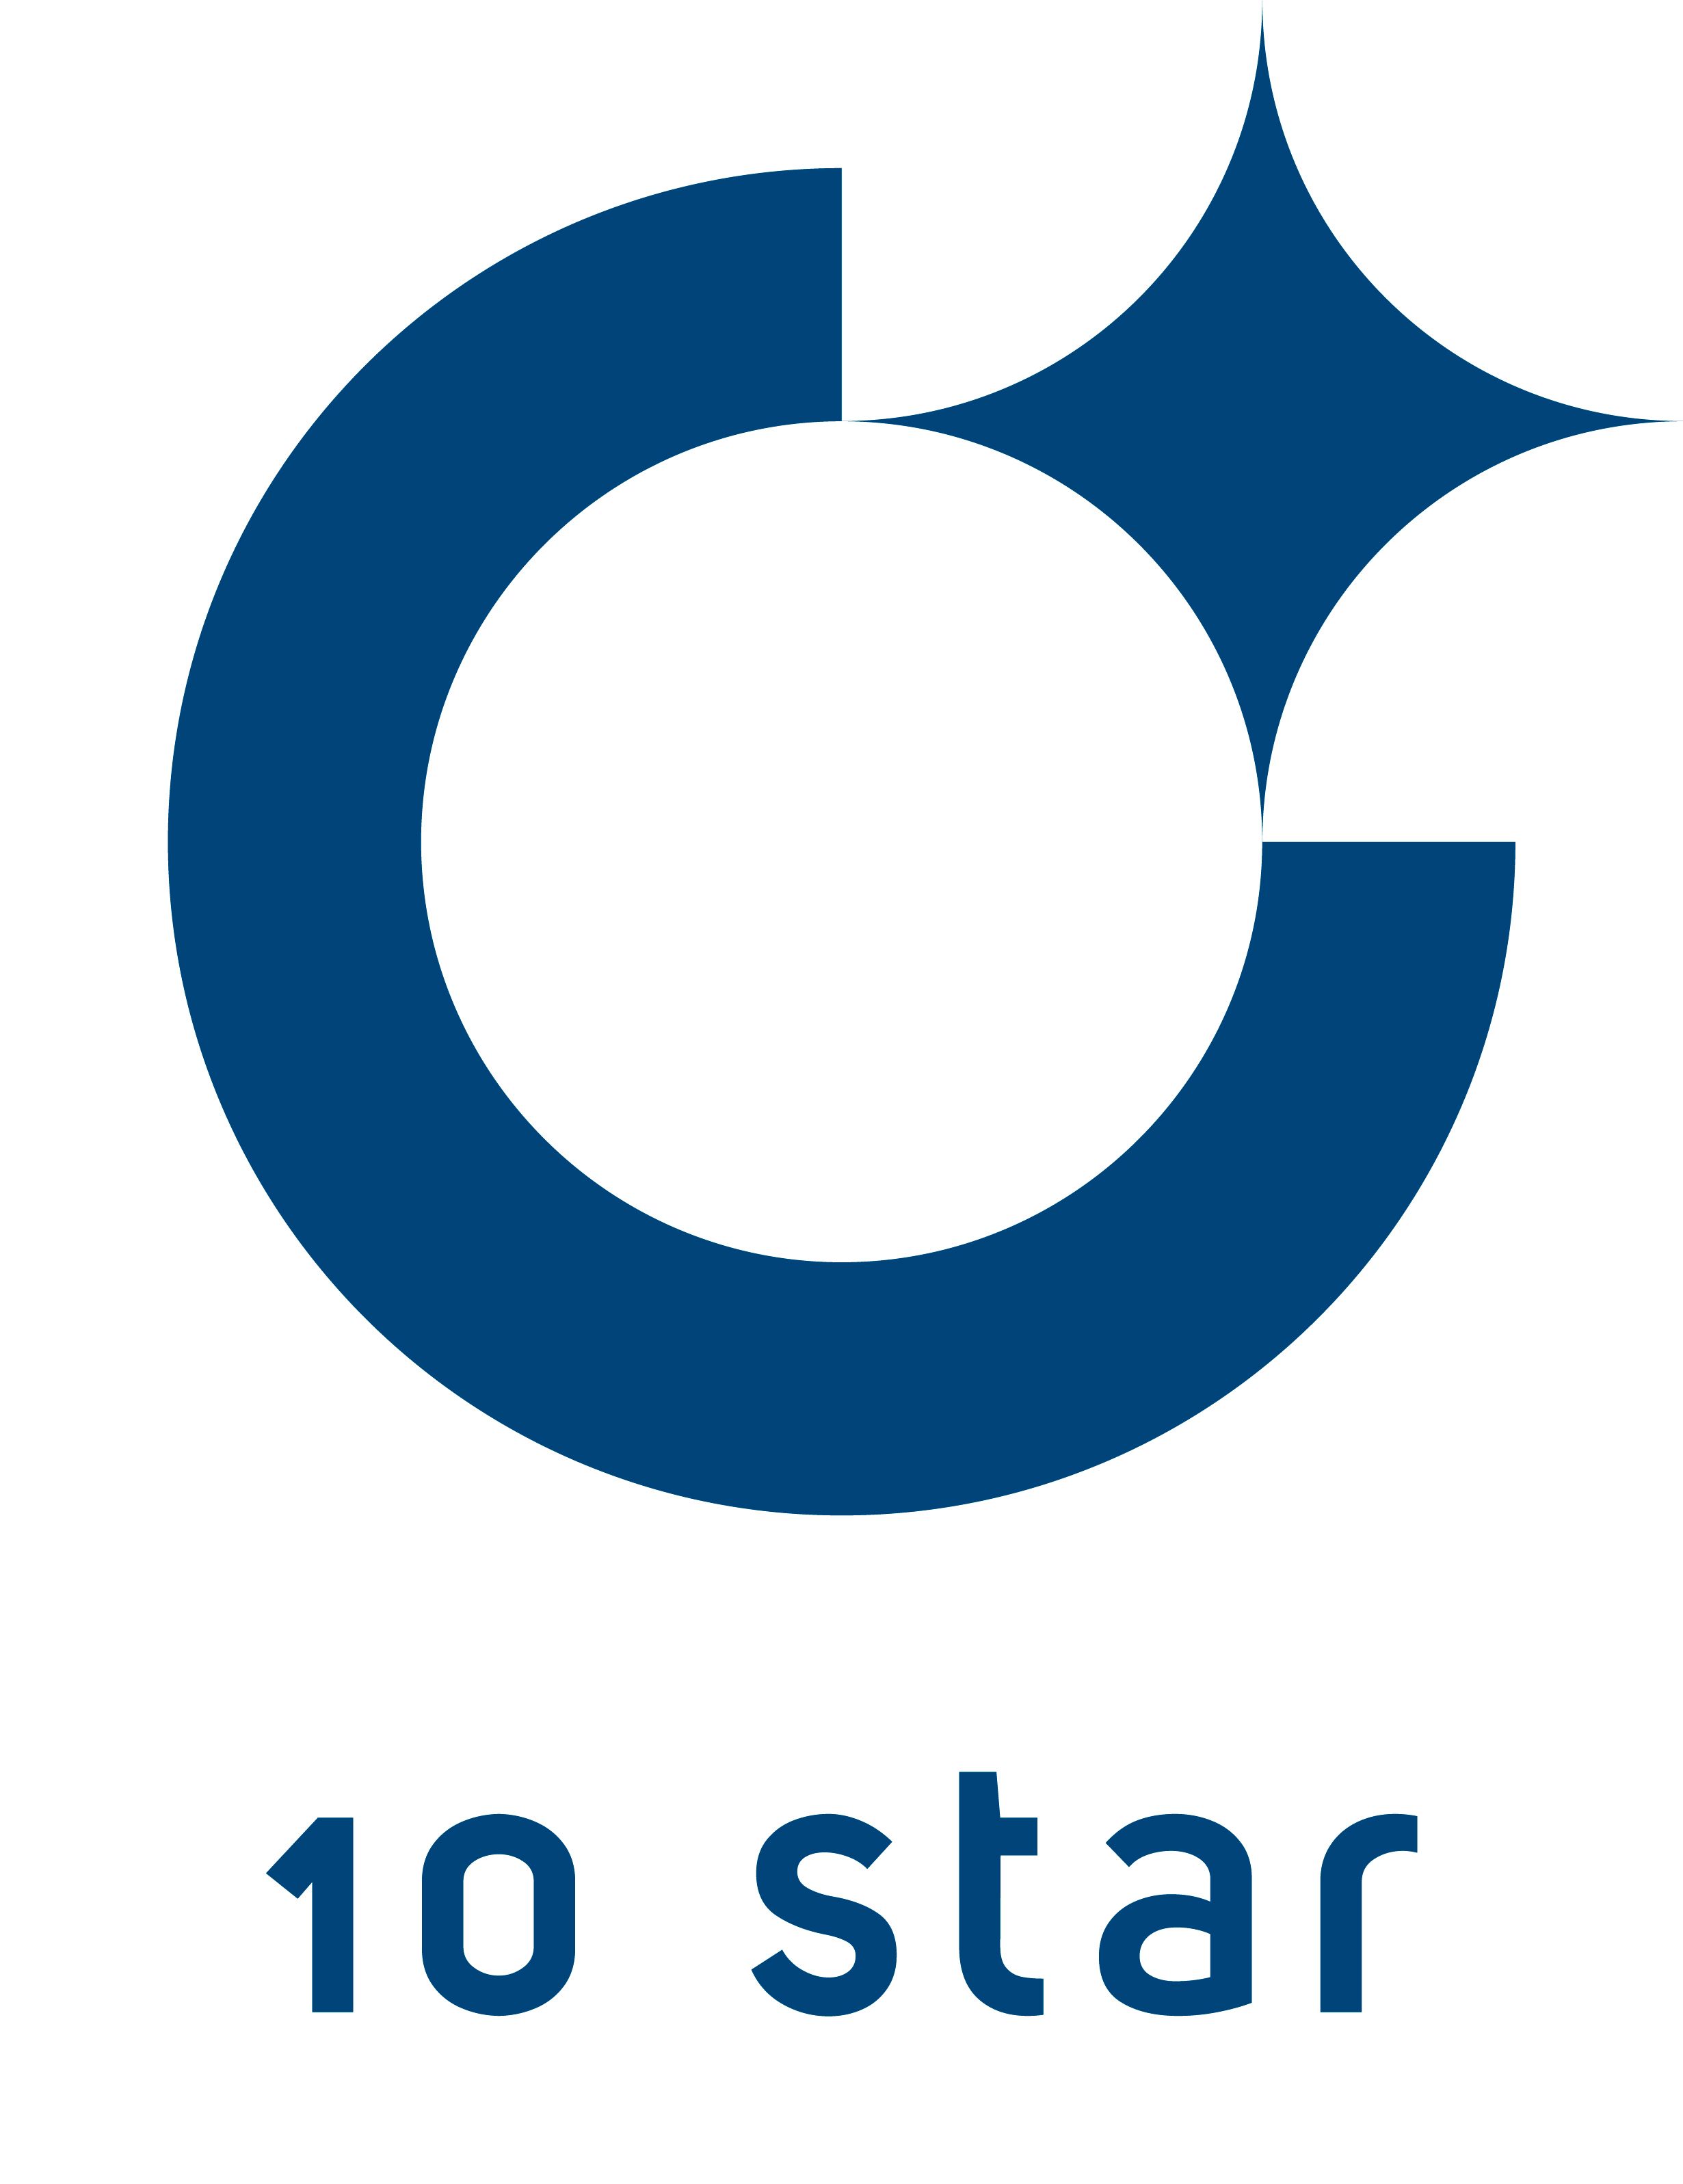 10star